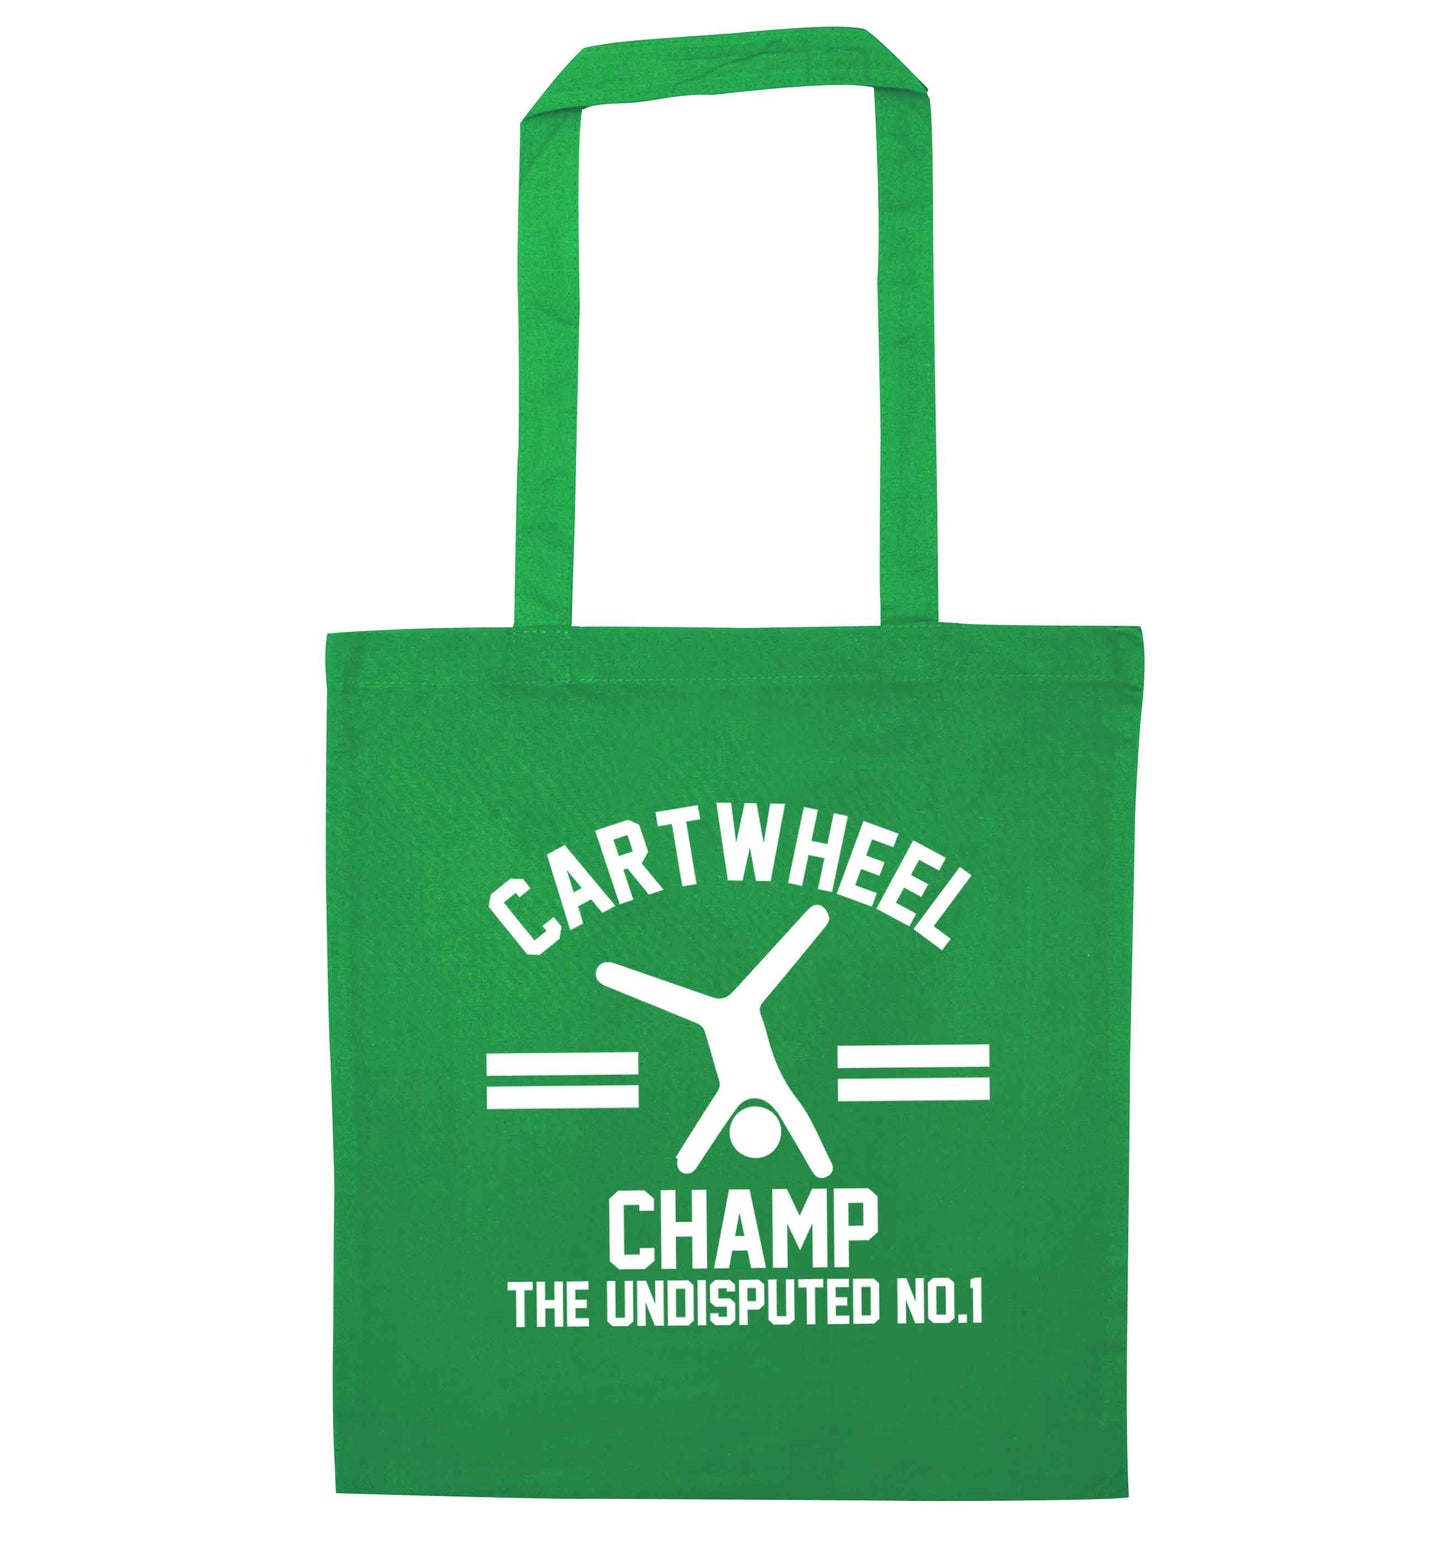 Undisputed cartwheel championship no.1  green tote bag